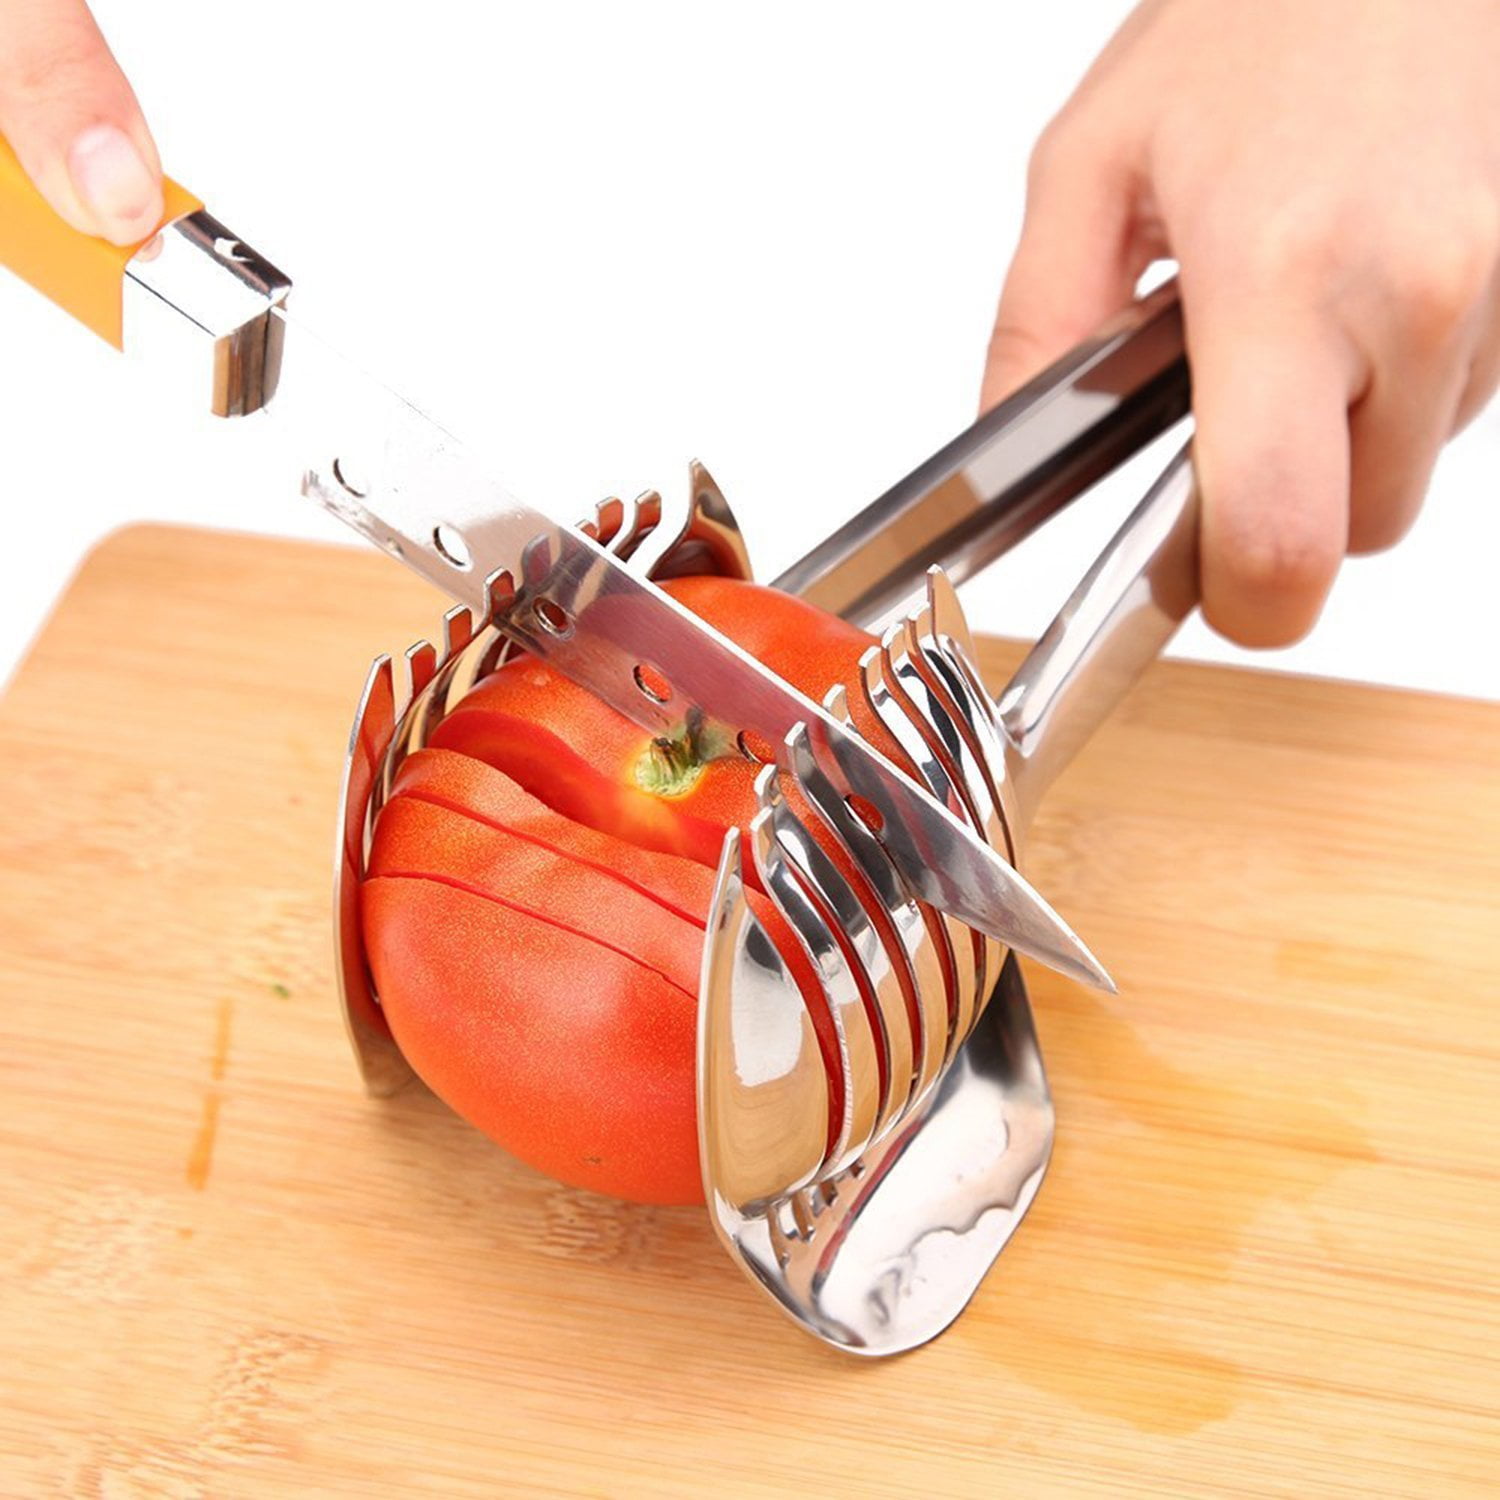 1x Food Slice Assistant Kitchen Tools 